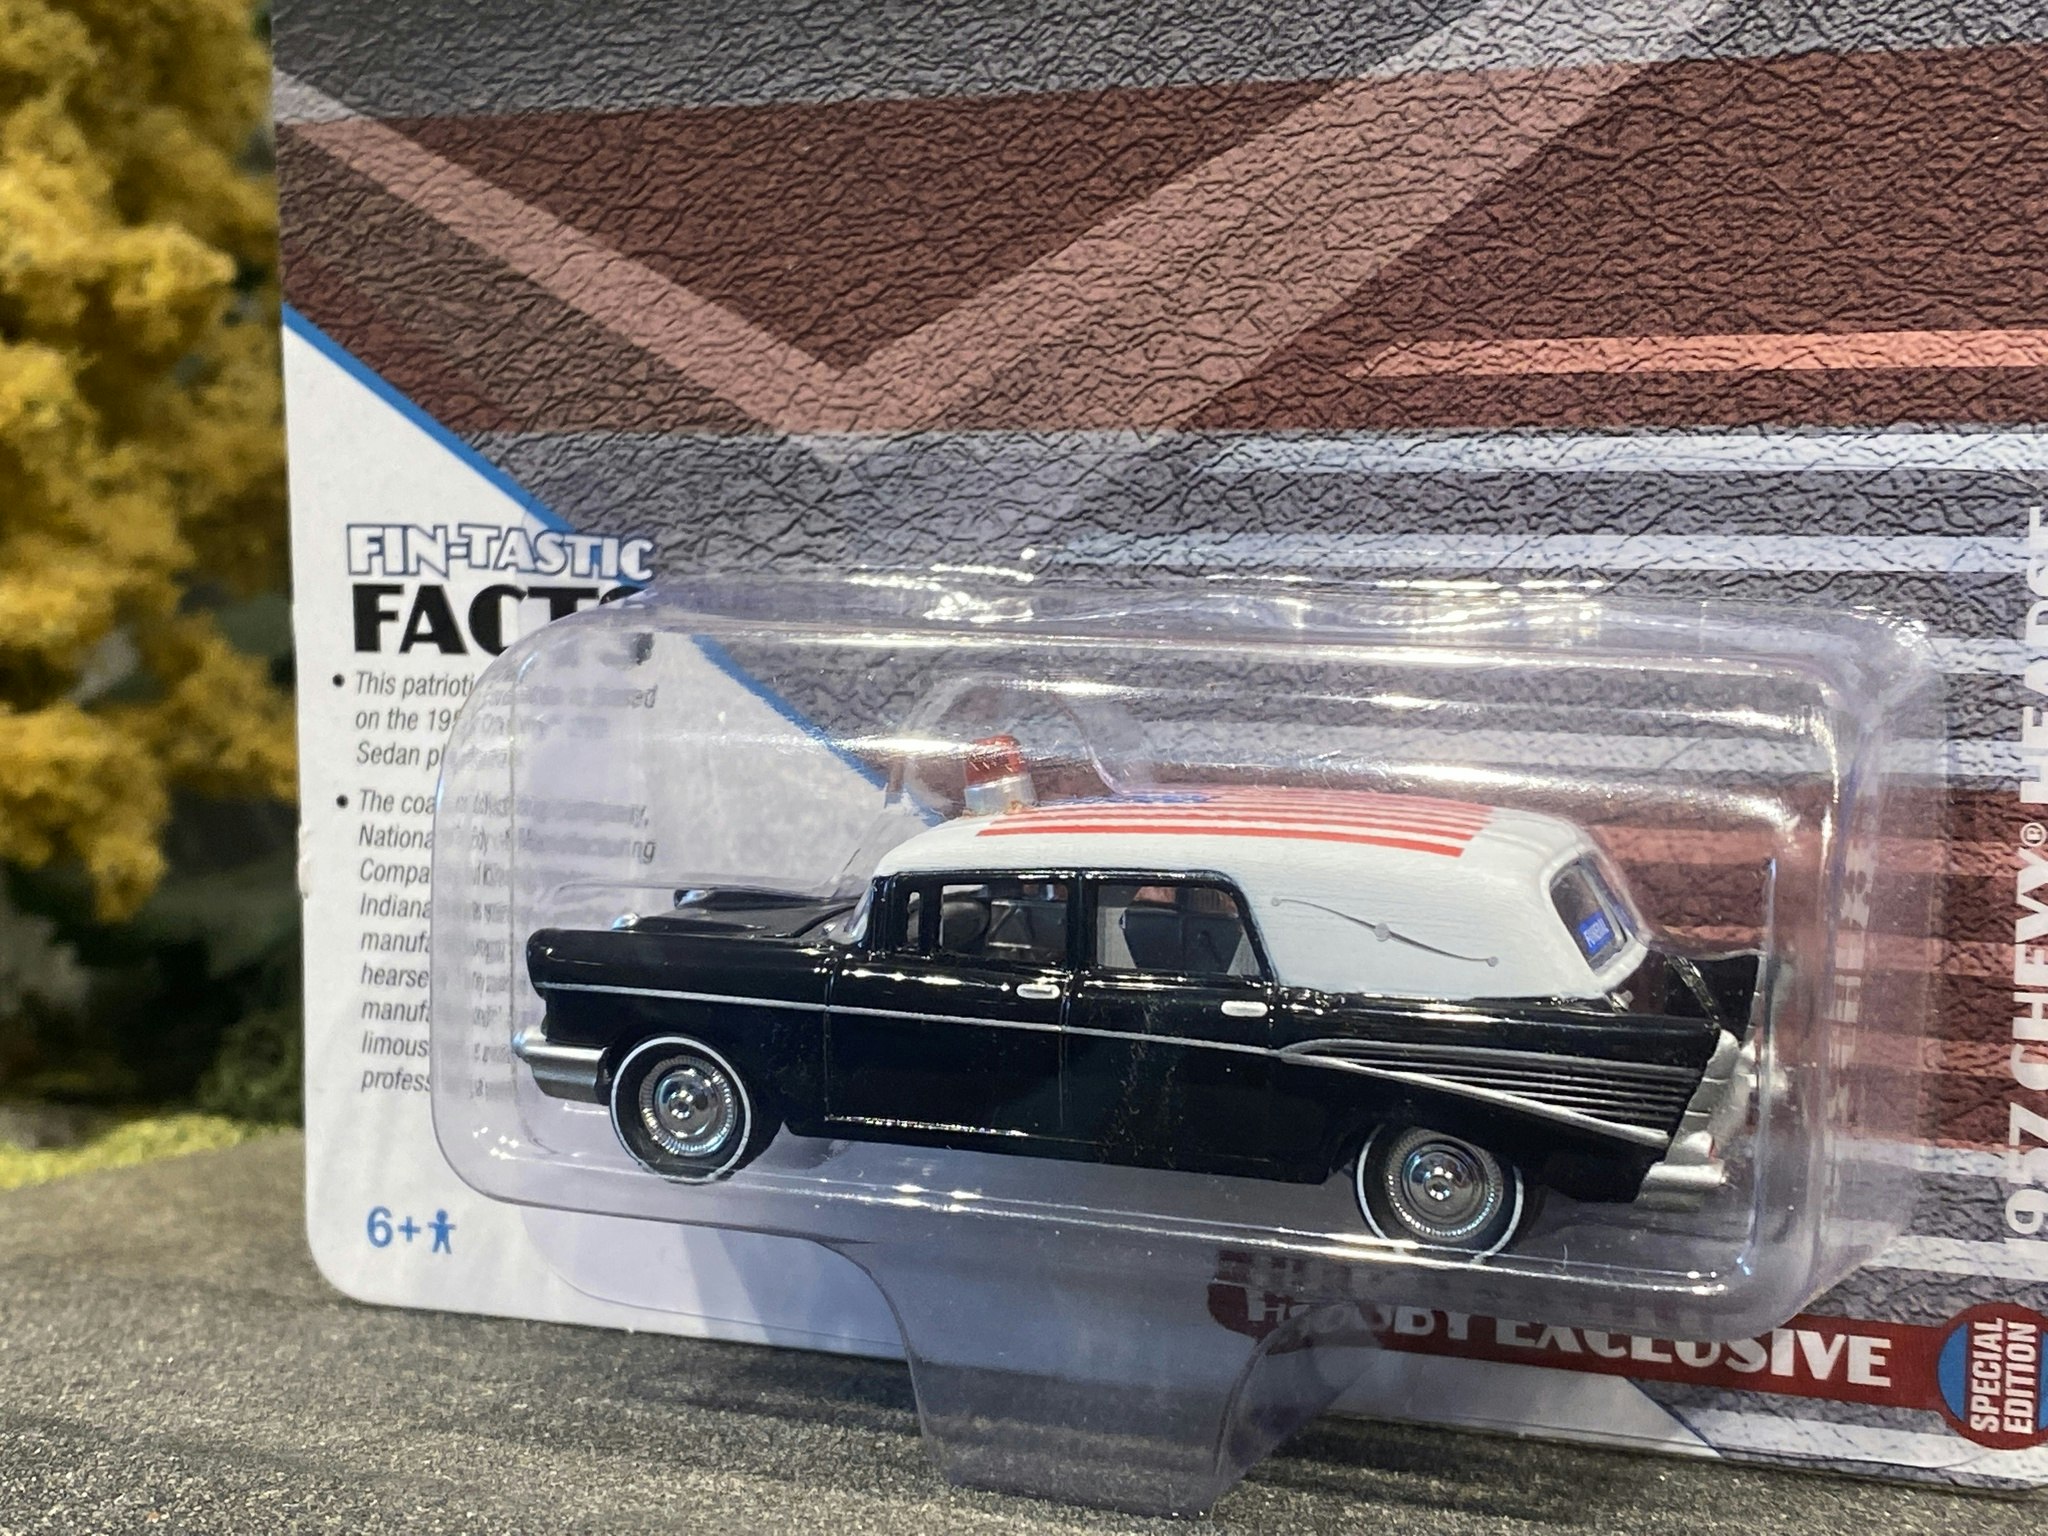 Skala 1/64 Elegant Chevrolet Hearse 57' Begravningsbil f Johnny Lightning